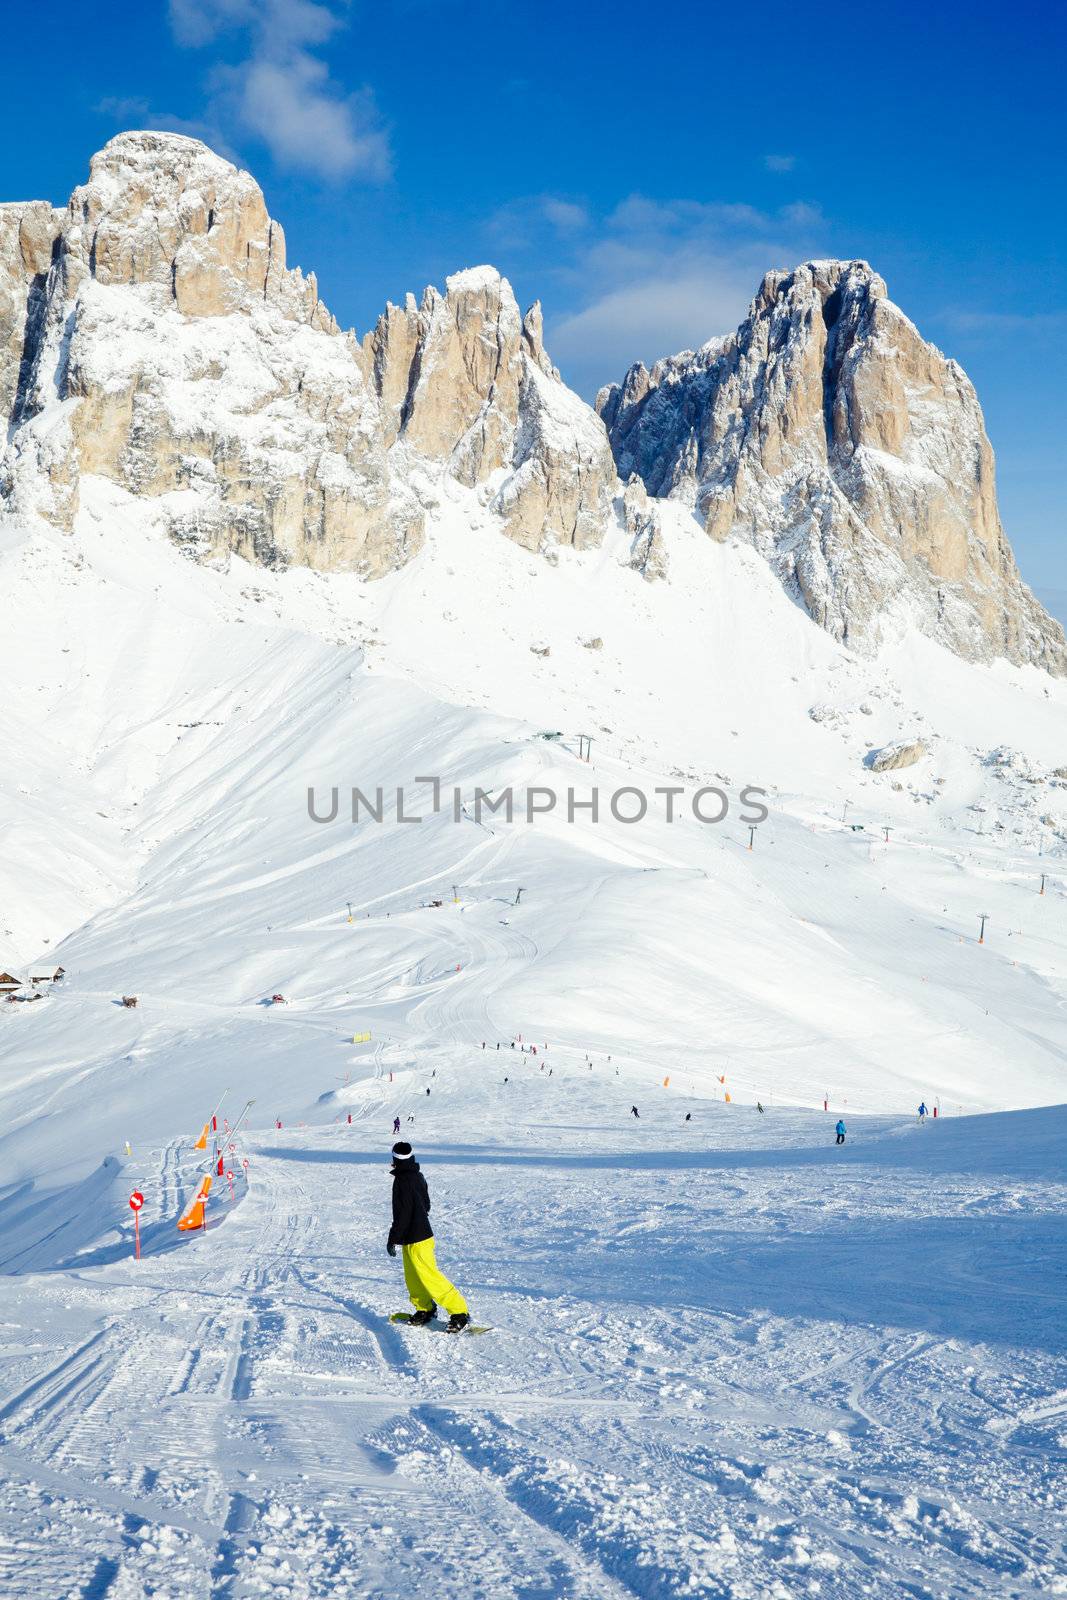 Snowborder going down the slope at Val Di Fassa ski resort in Italy